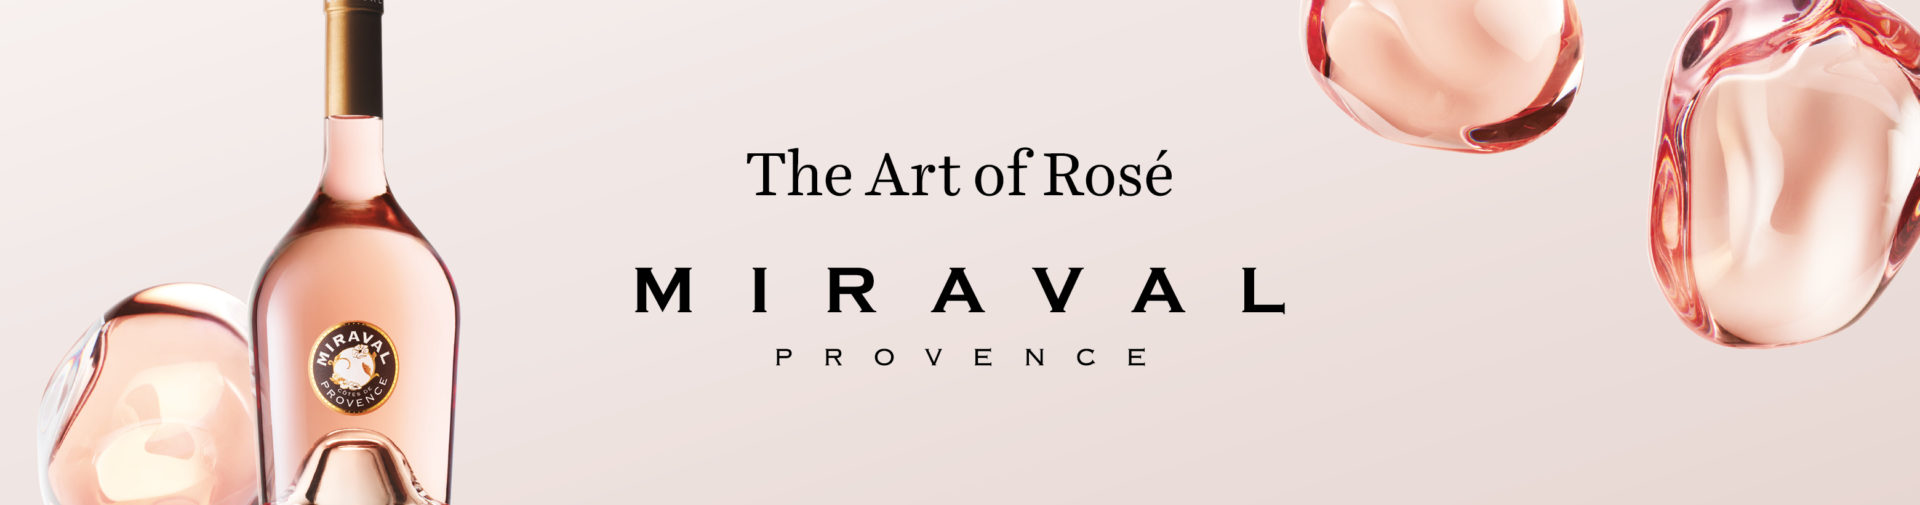 Miraval rose